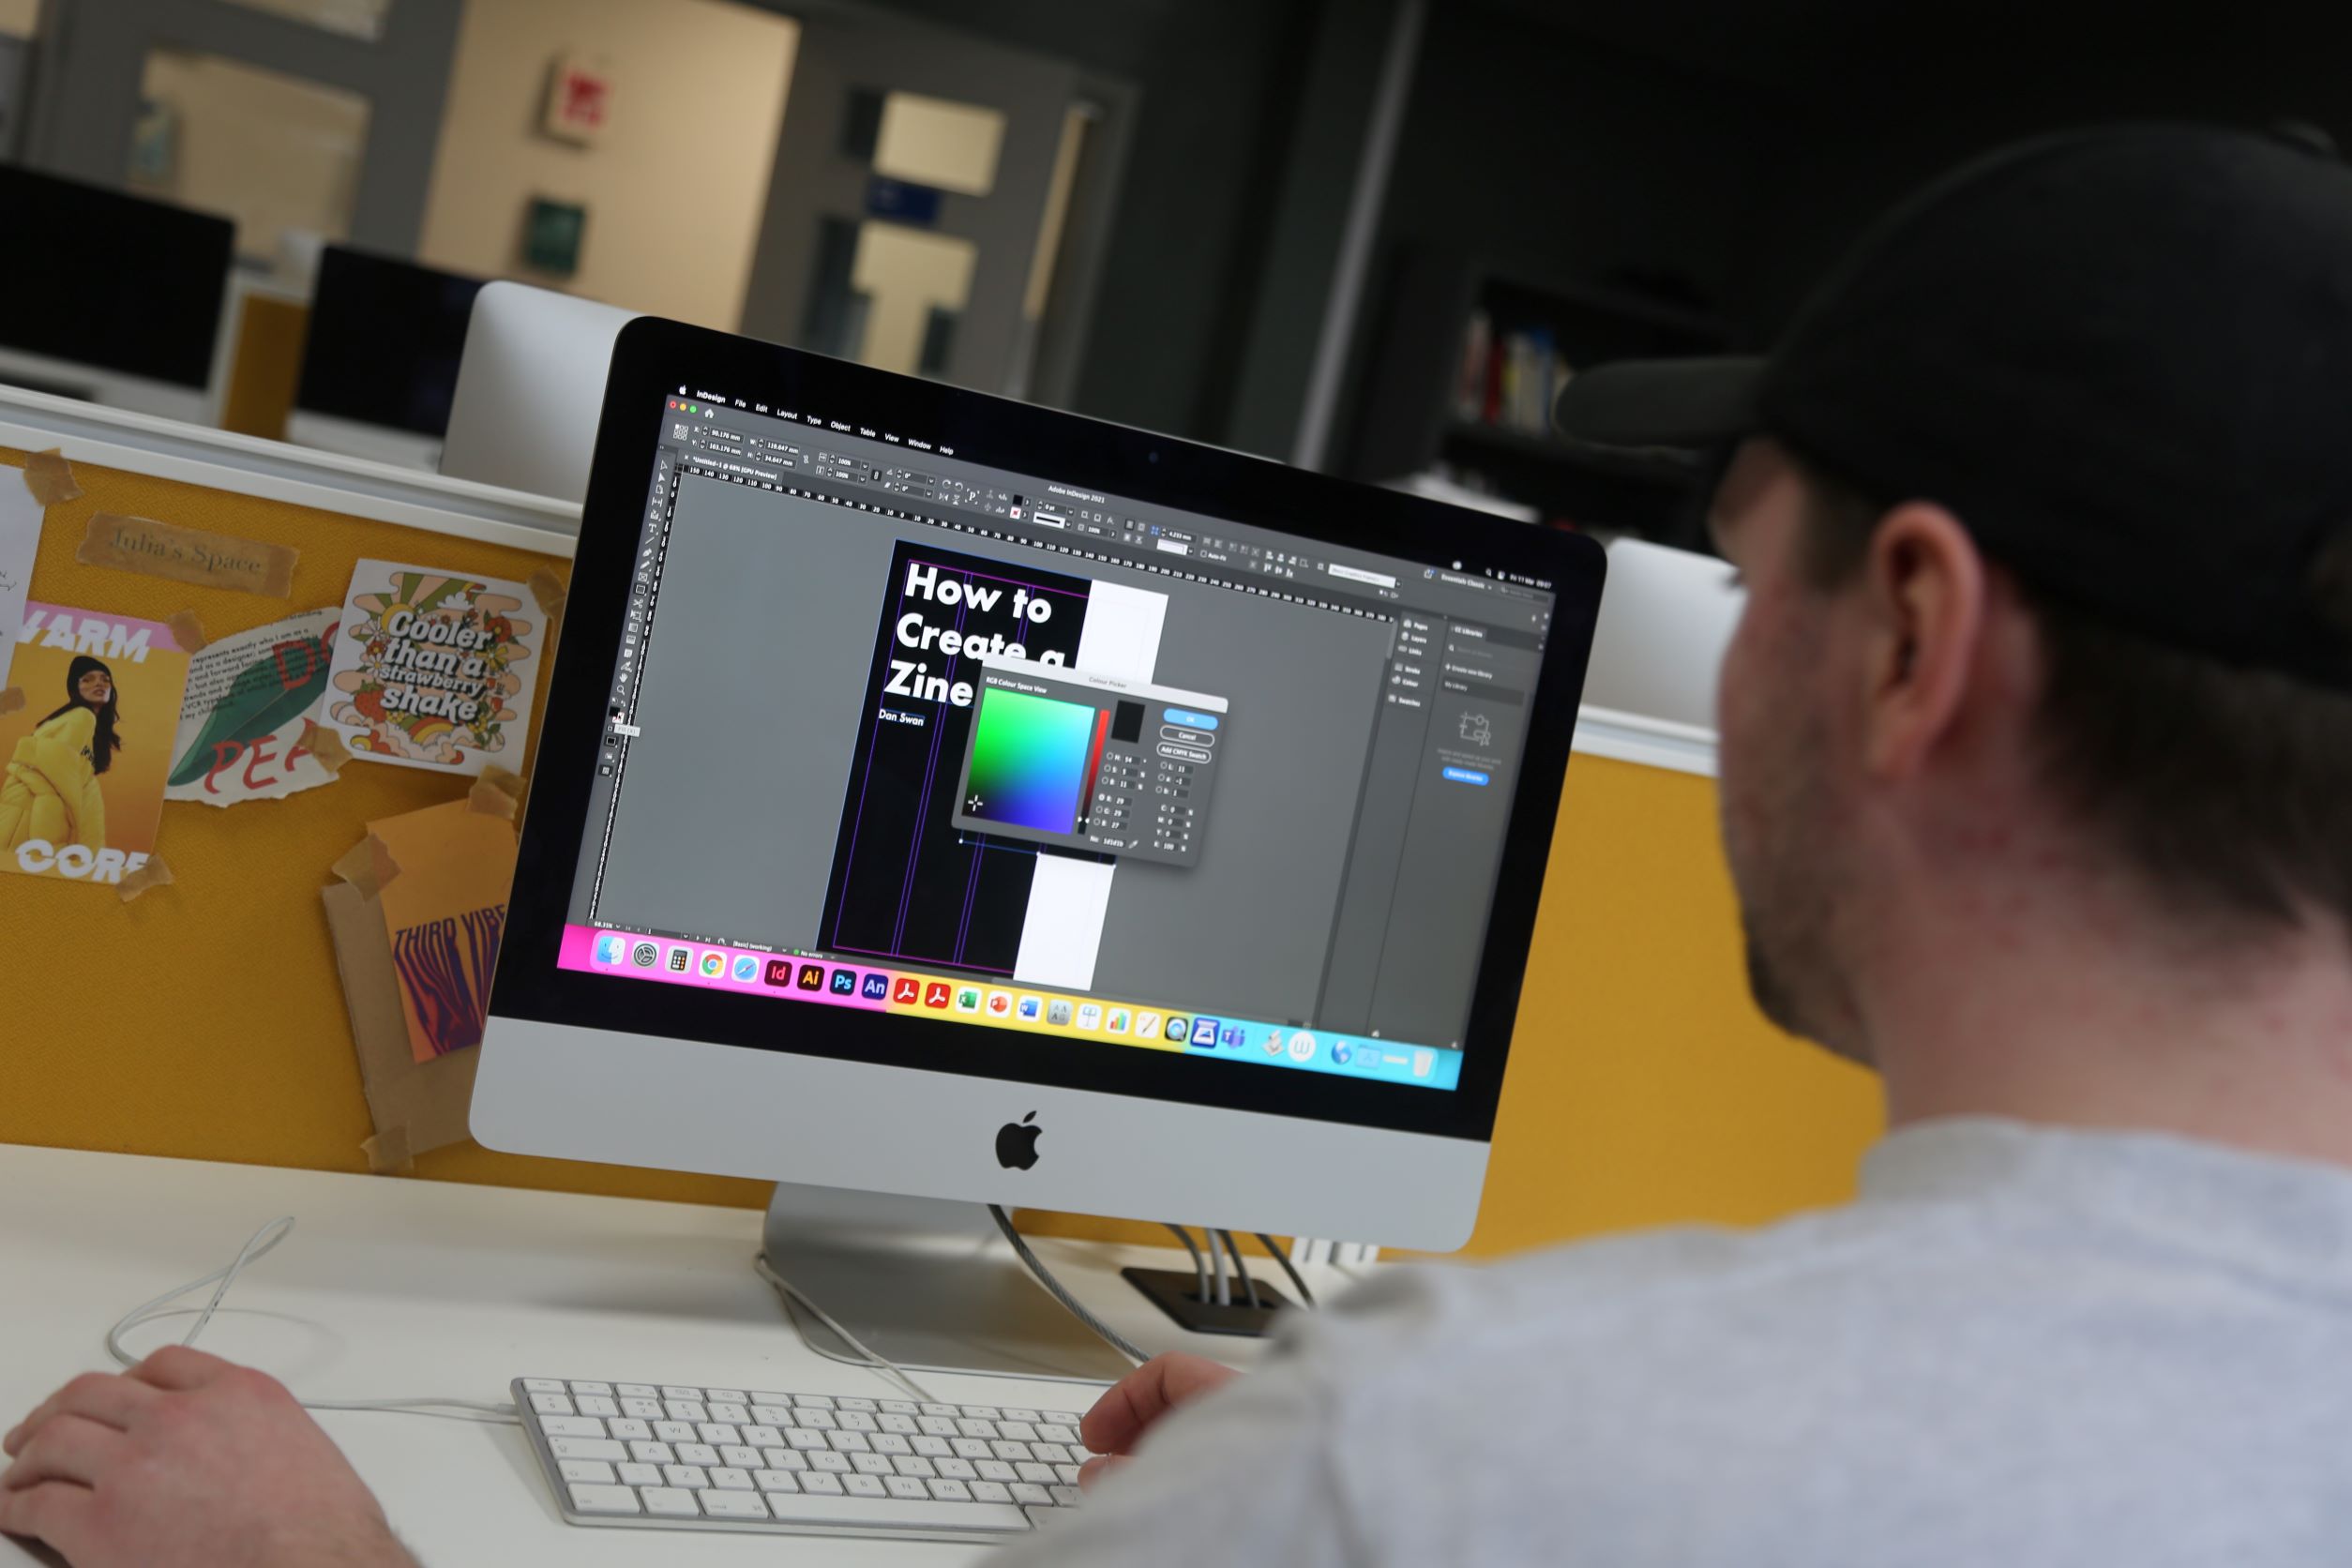 Dan designing a graphic using iMac computer